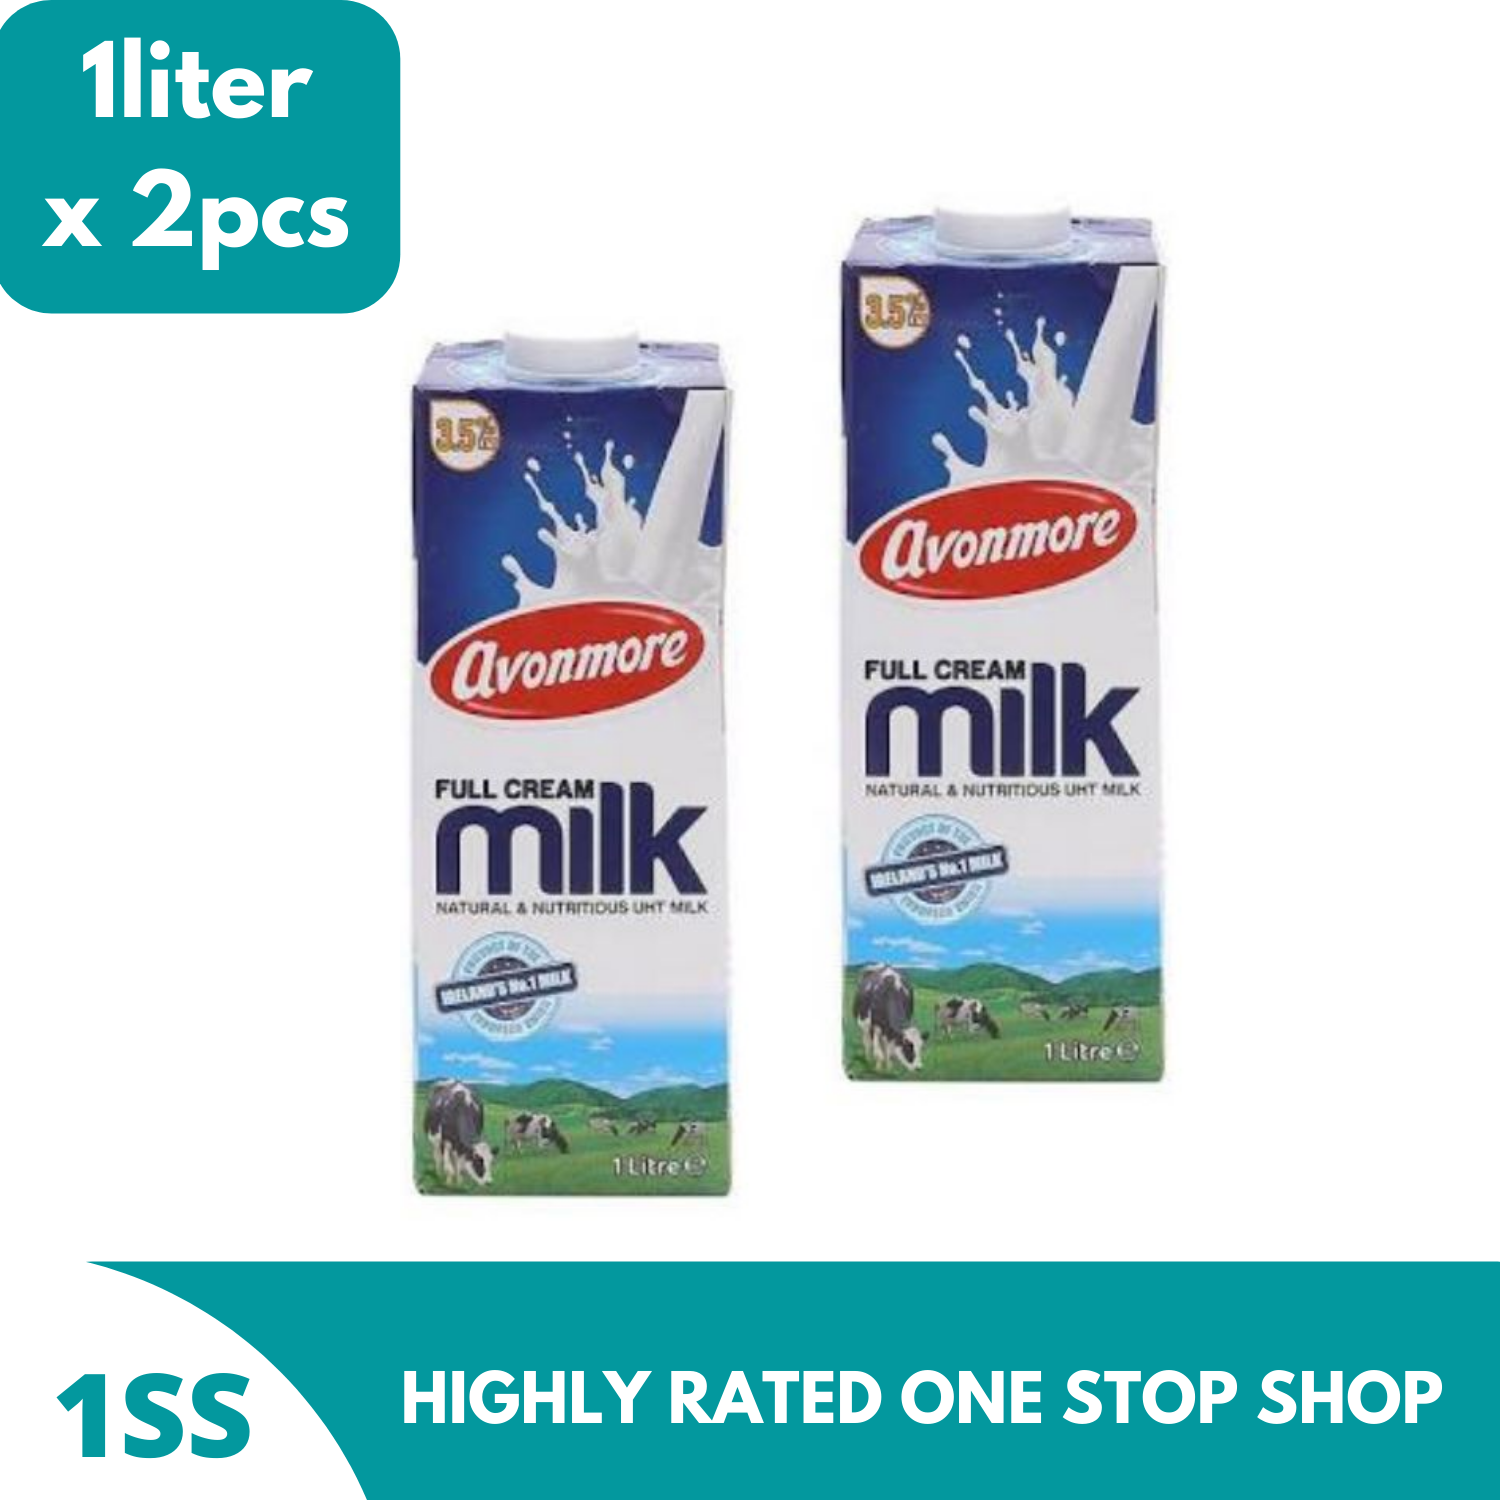 Avonmore Whole Super Milk 1.75 Litre